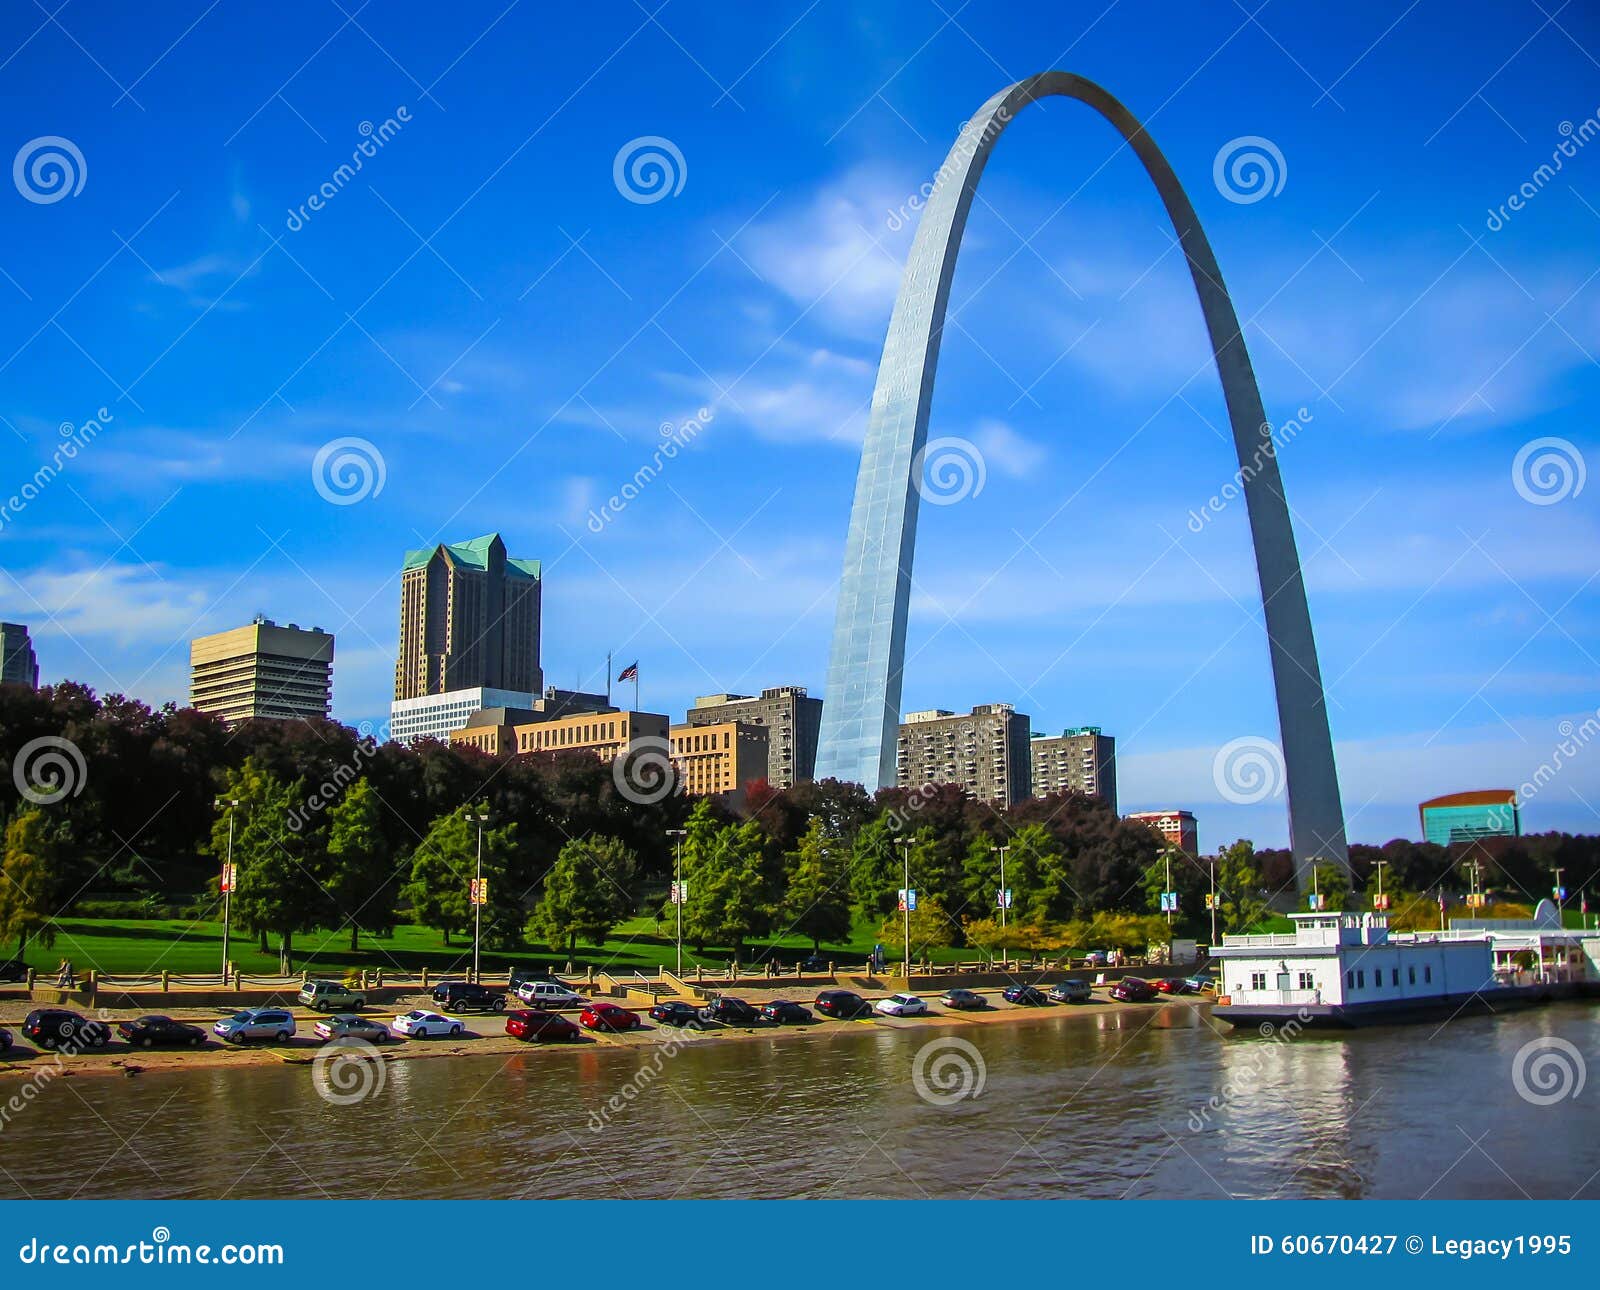 Saint Louis Arch stock image. Image of missouri, missippi - 60670427